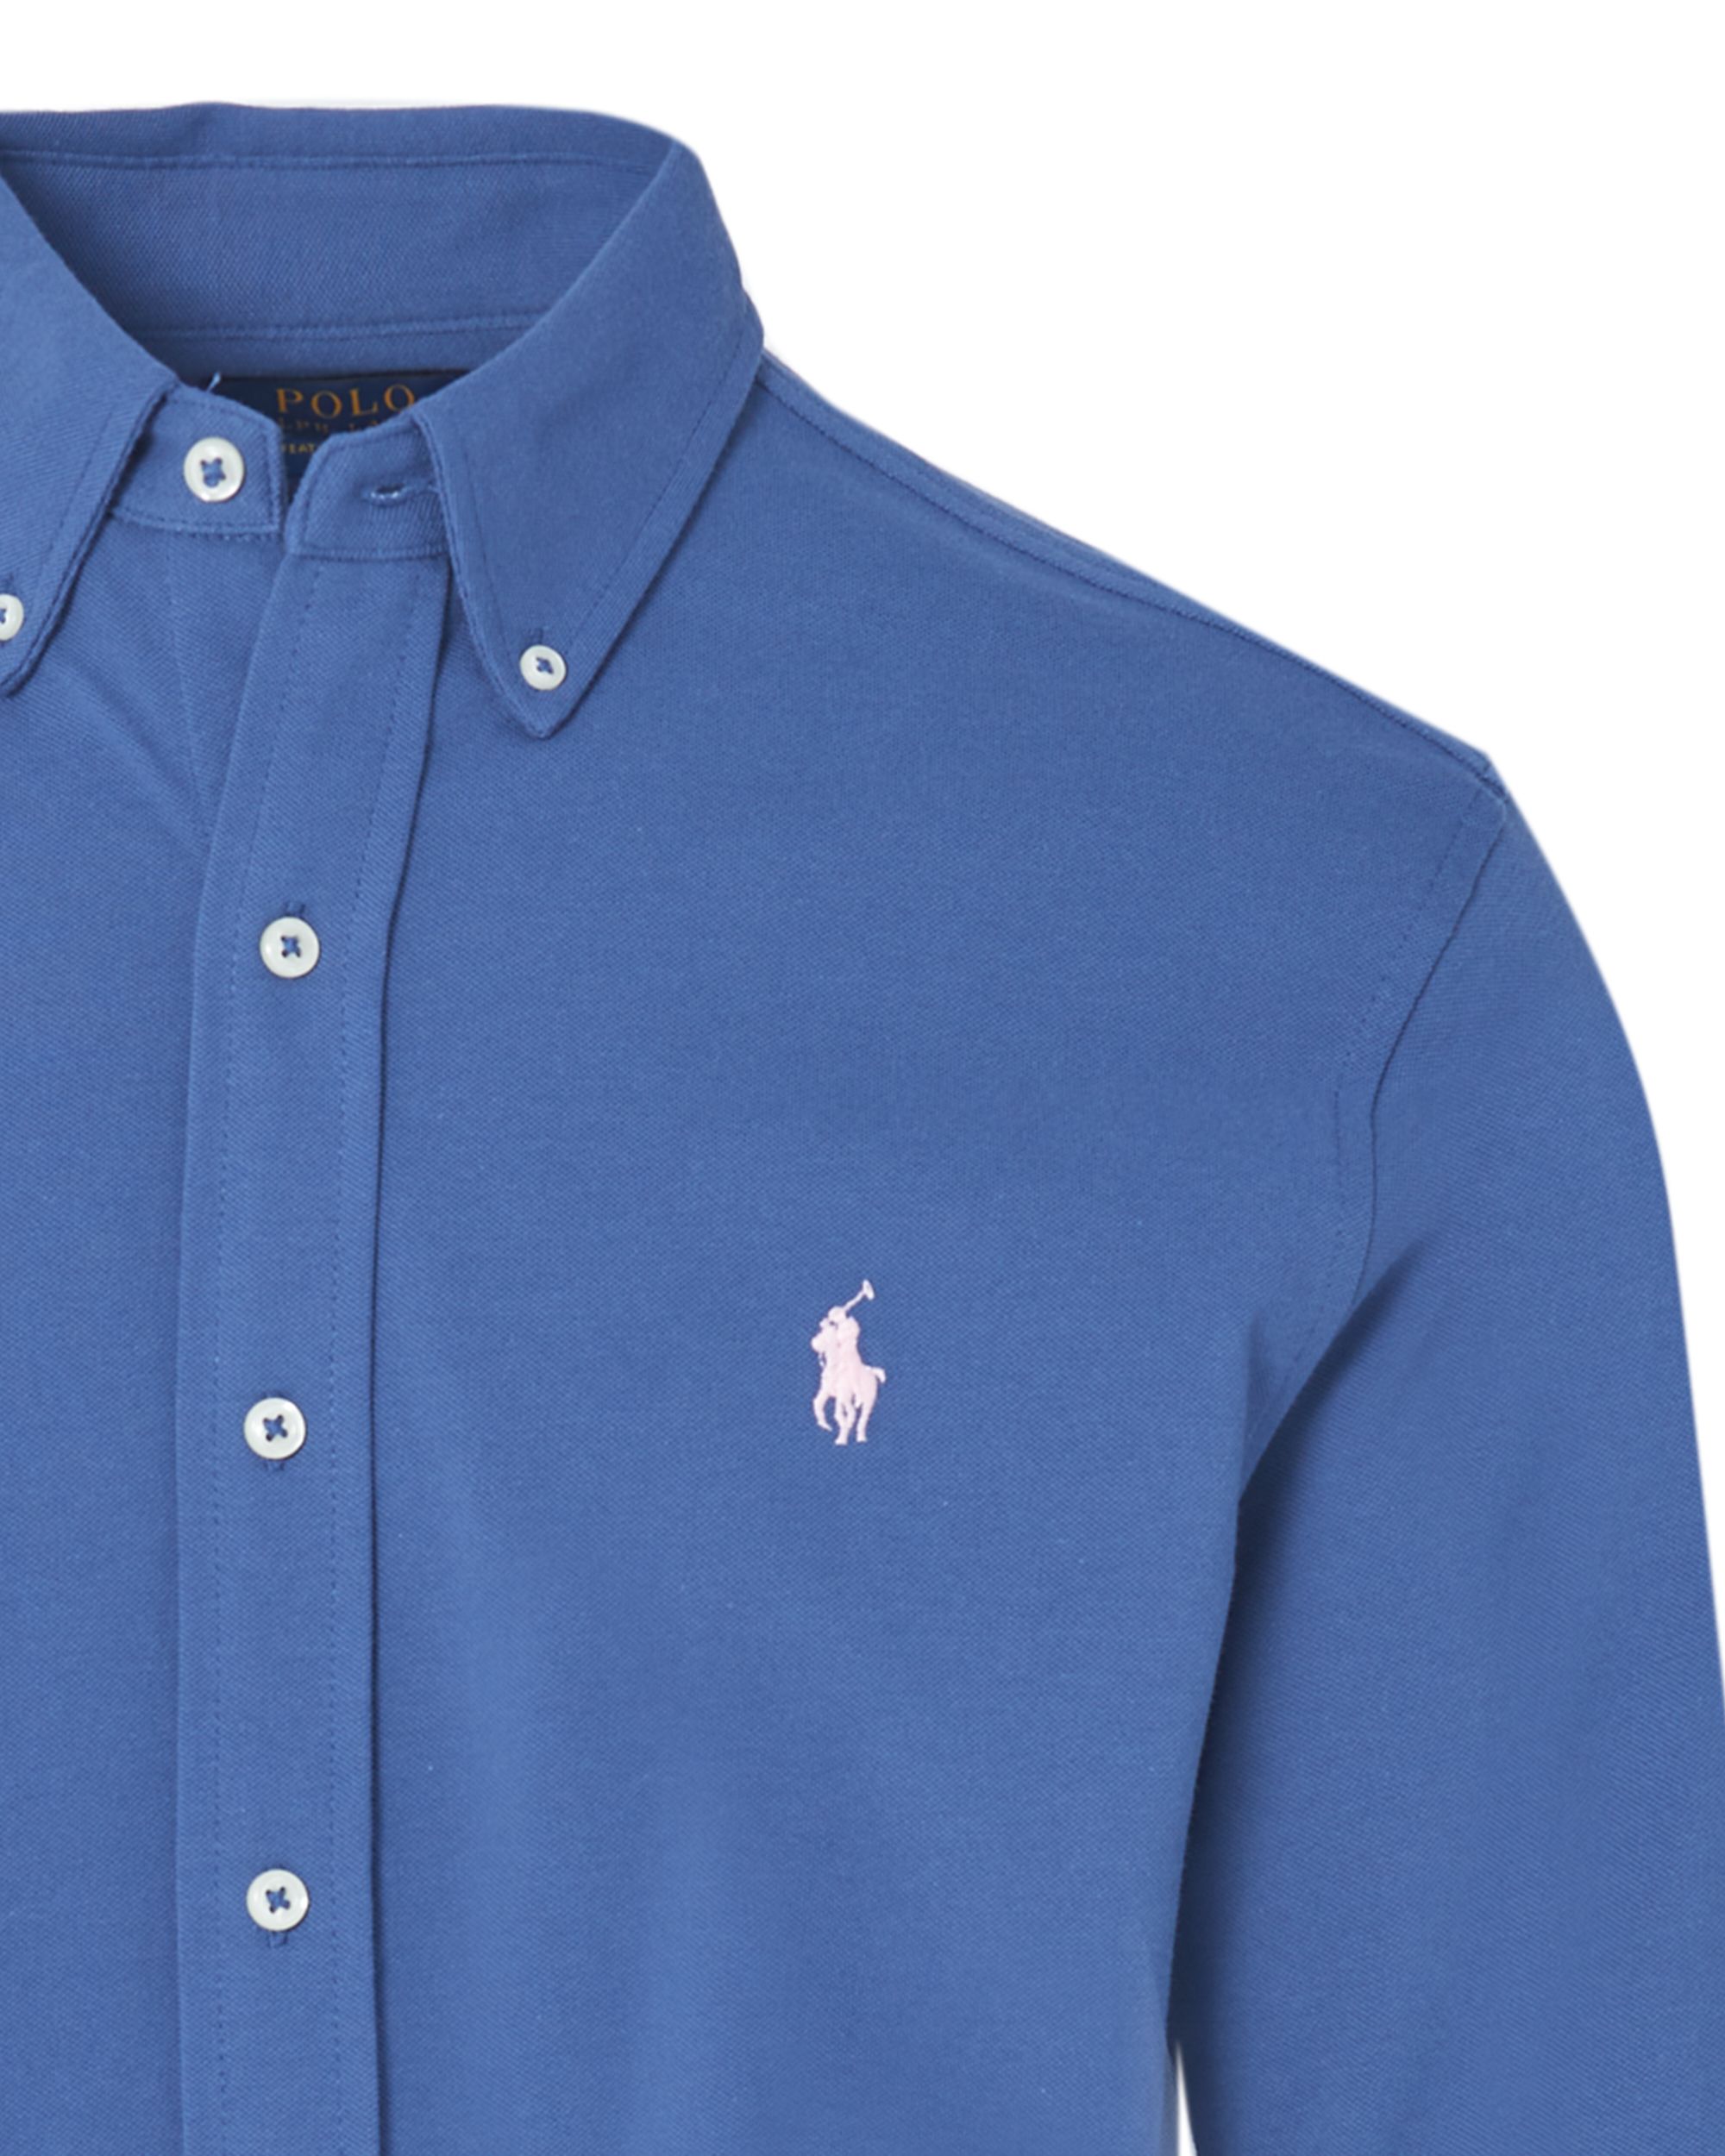 Polo Ralph Lauren Casual Overhemd LM Blauw 083420-001-L